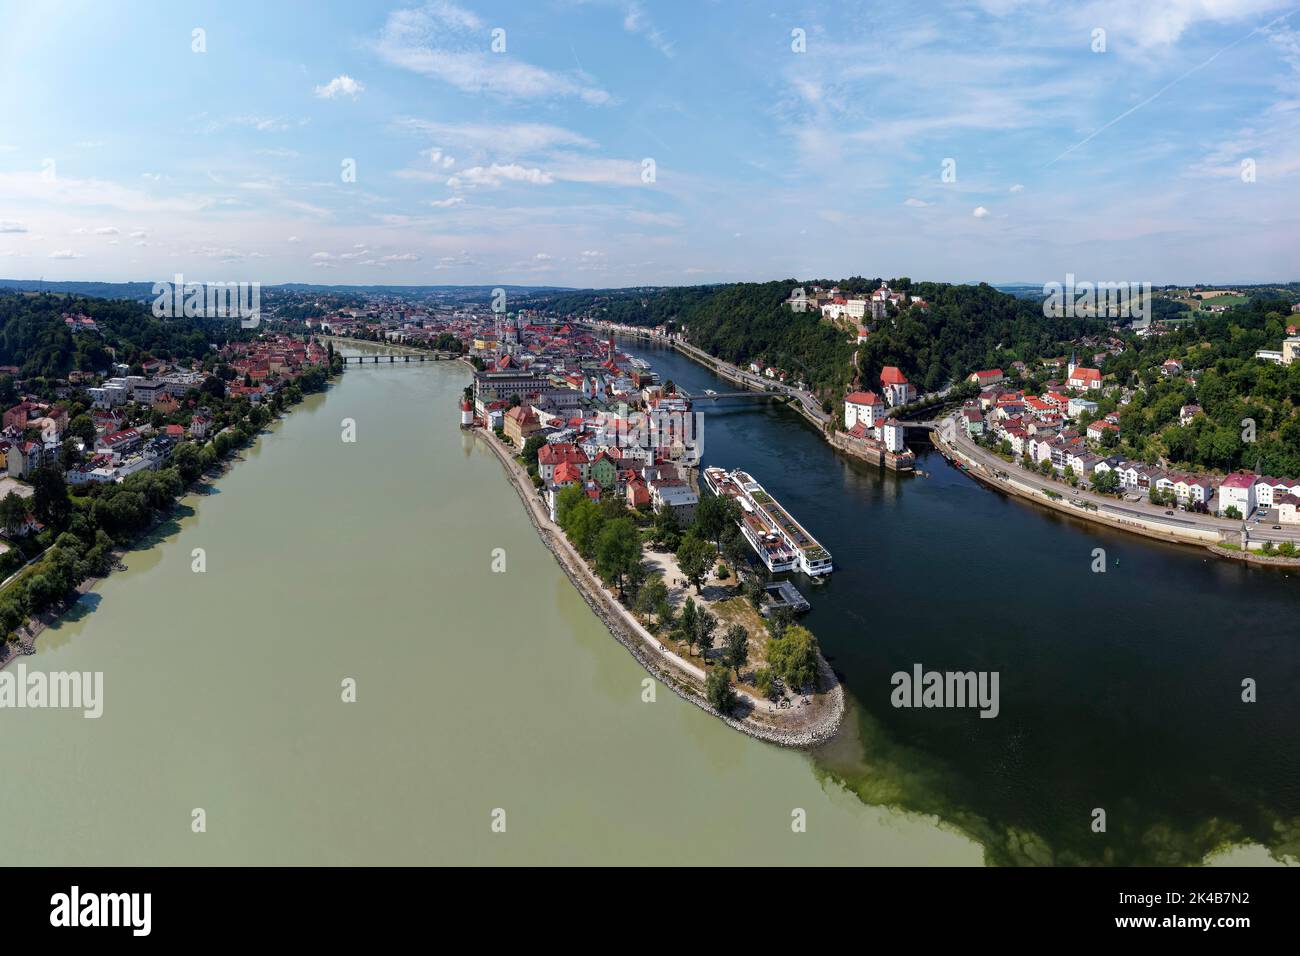 Left Inn city and Inn, centre three river corner, right Danube, further back Ilz, Veste Oberhaus, Veste Niederhaus, right Ilz city, aerial view Stock Photo